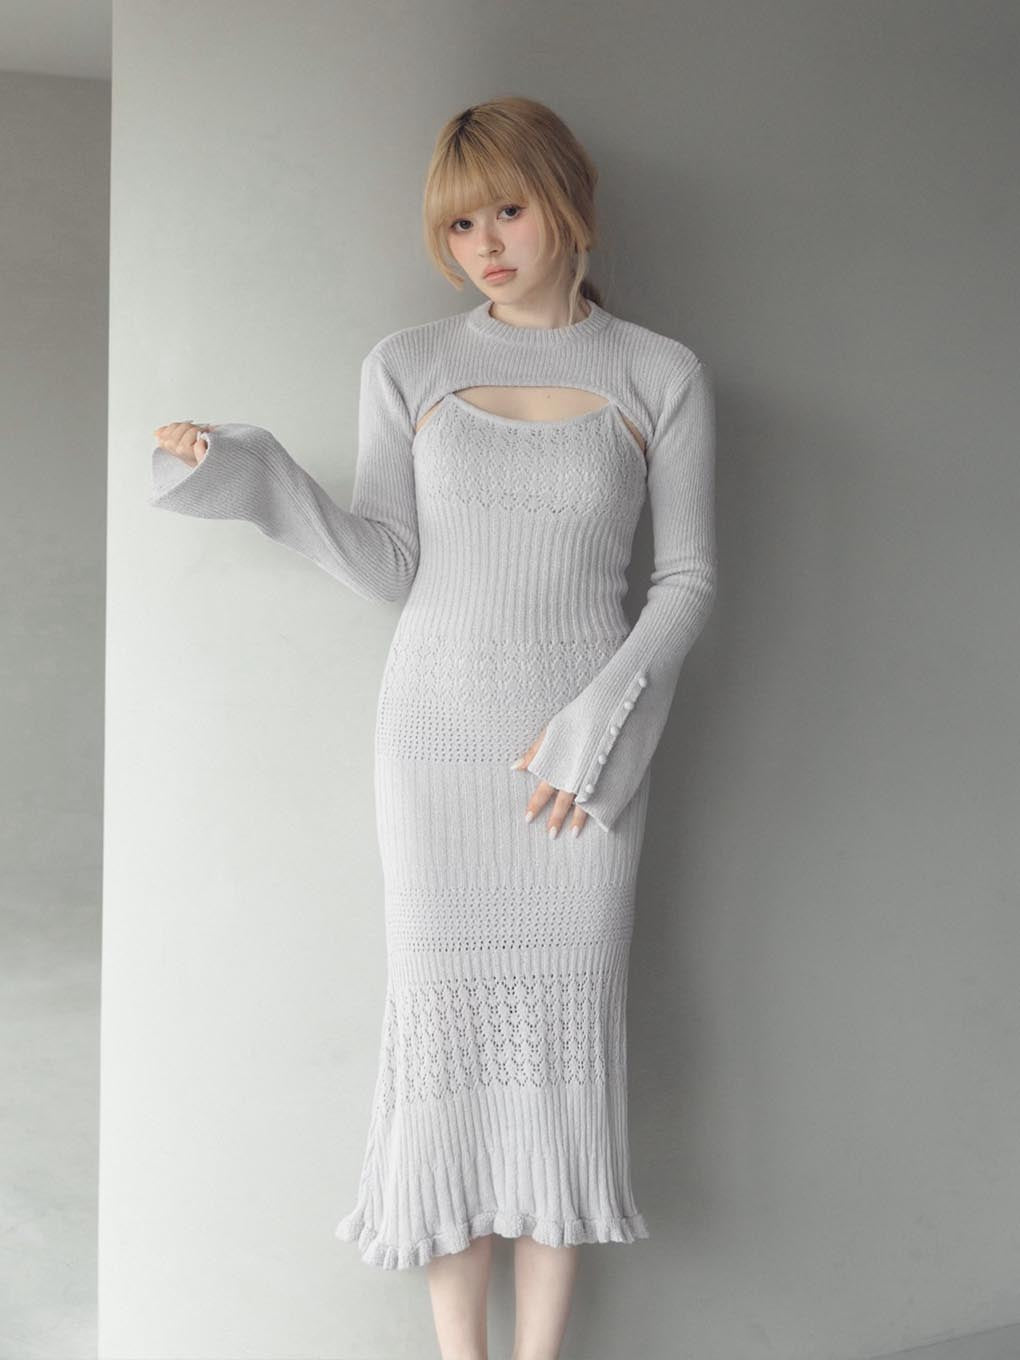 Layered crochet dress